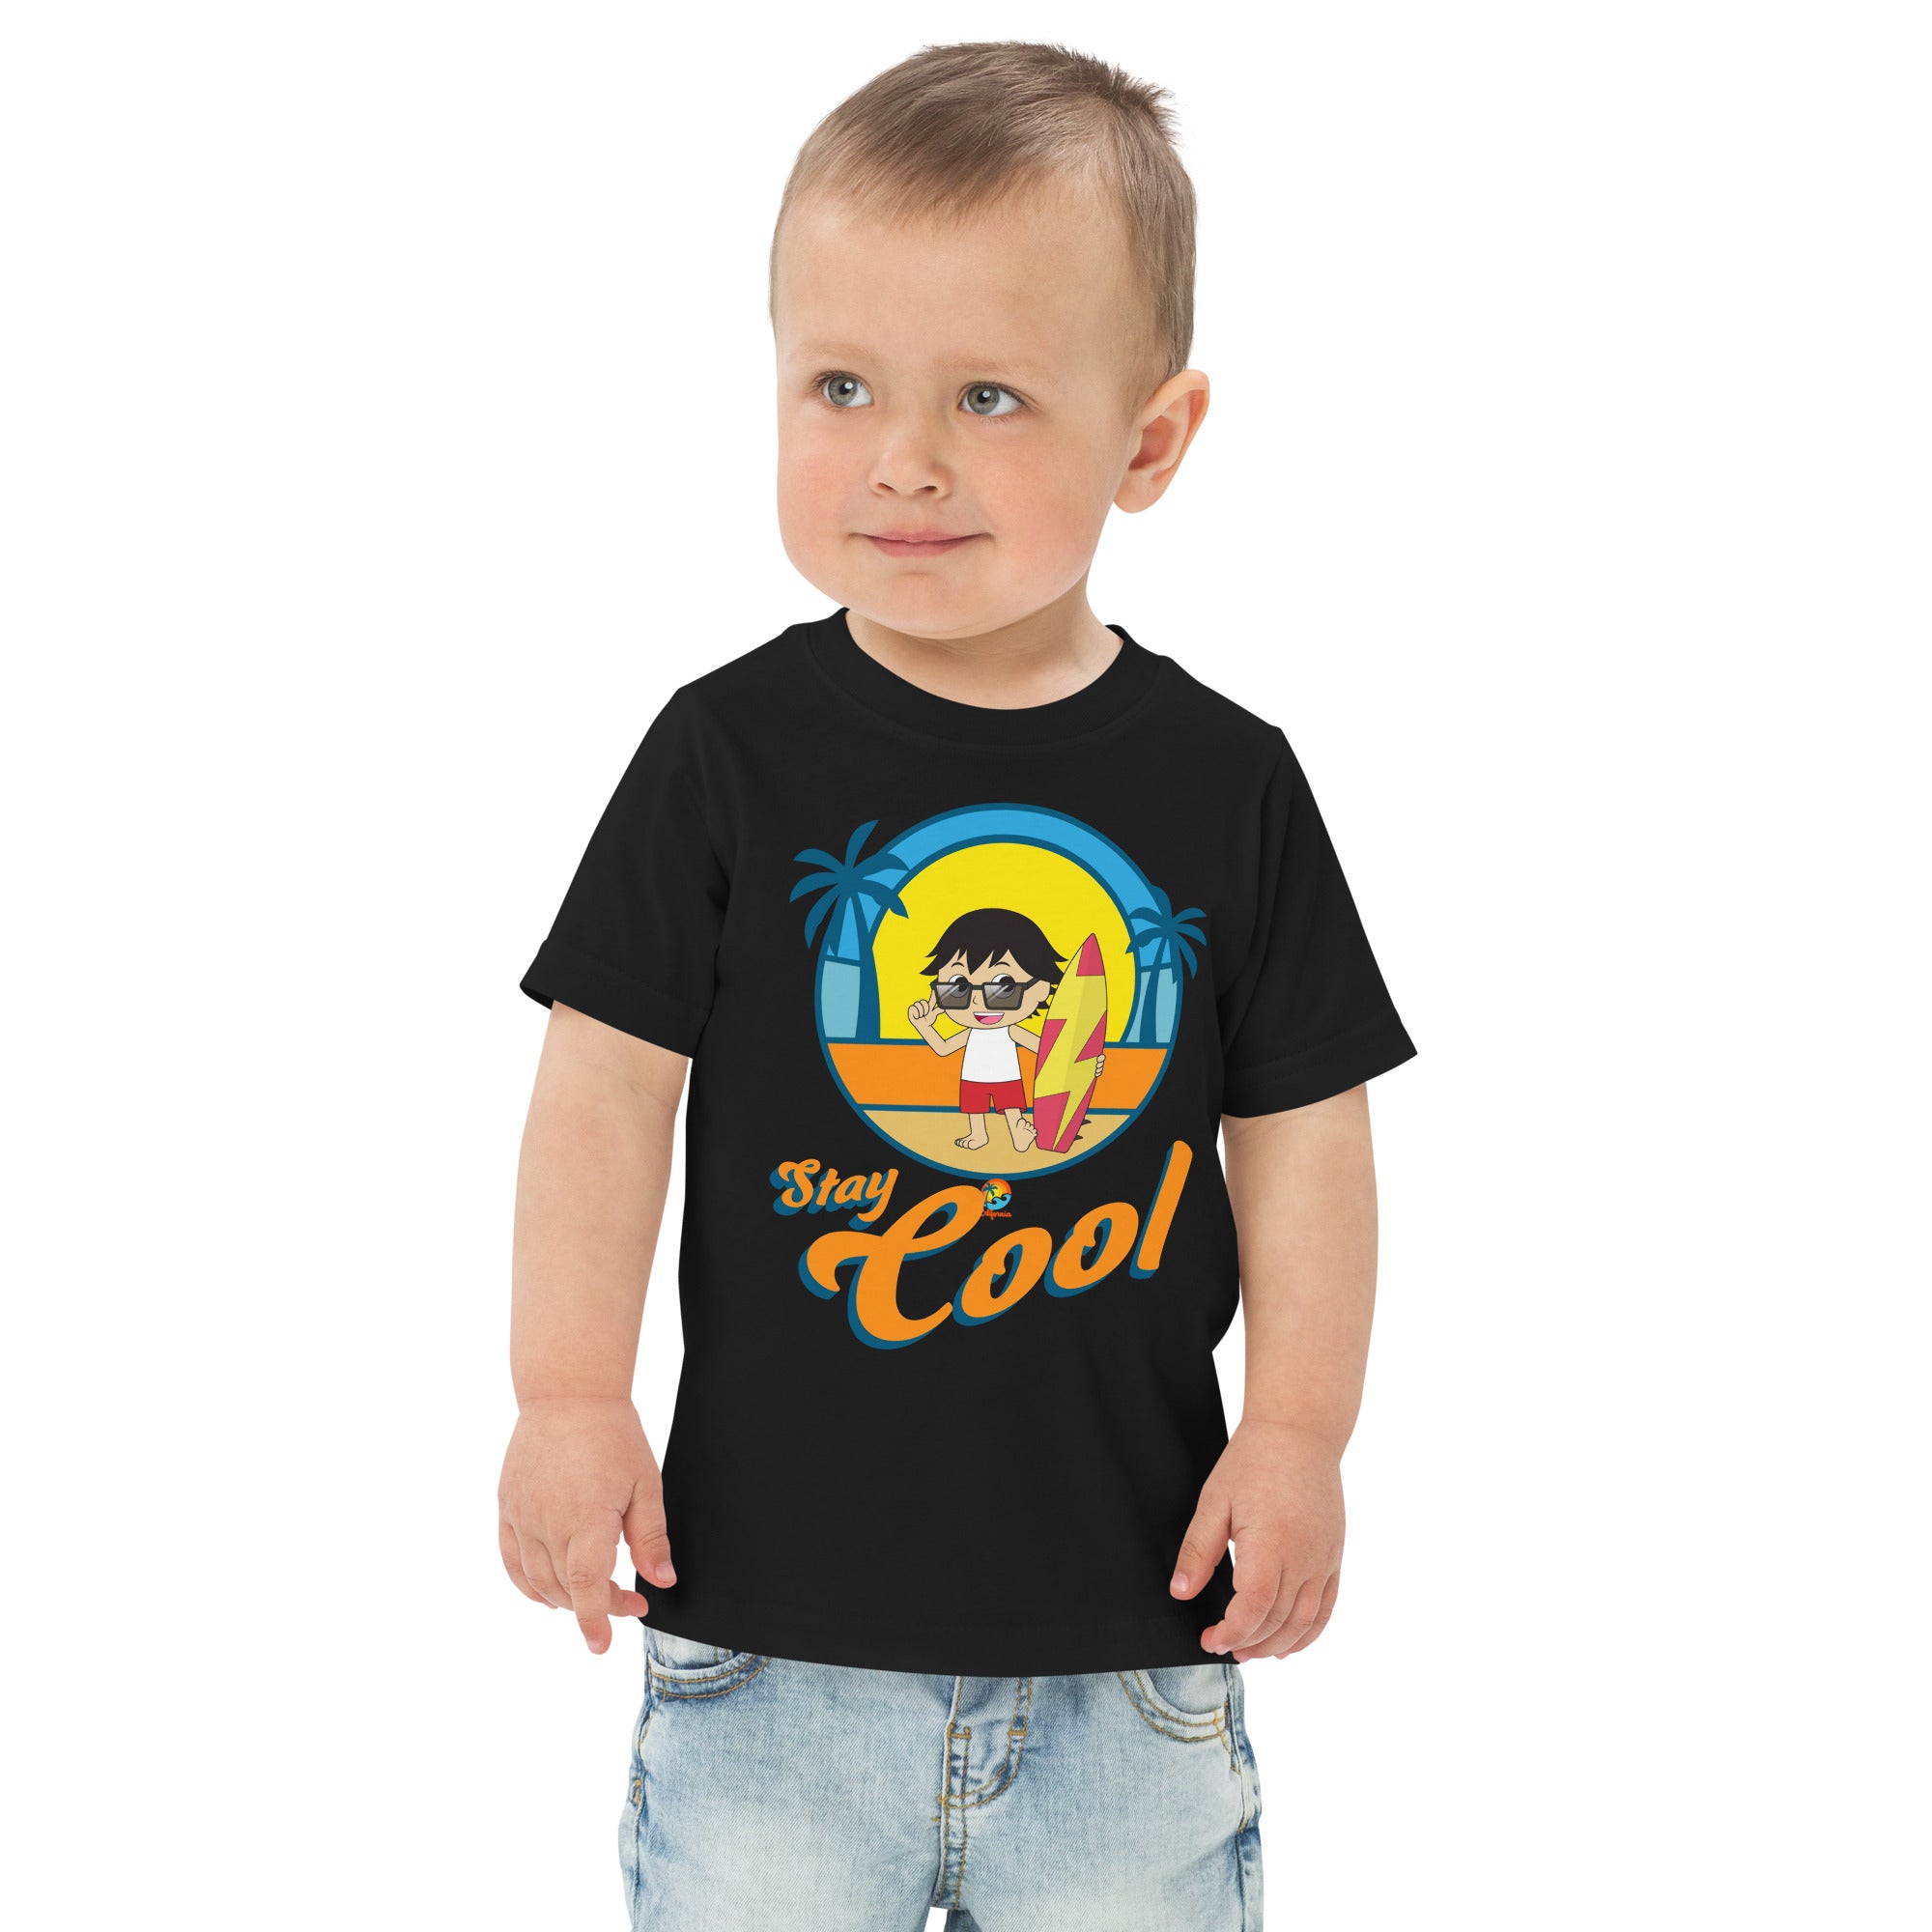 World Ryan\'s T-shirt – World Stay Ryan\'s Cool Toddler Shop